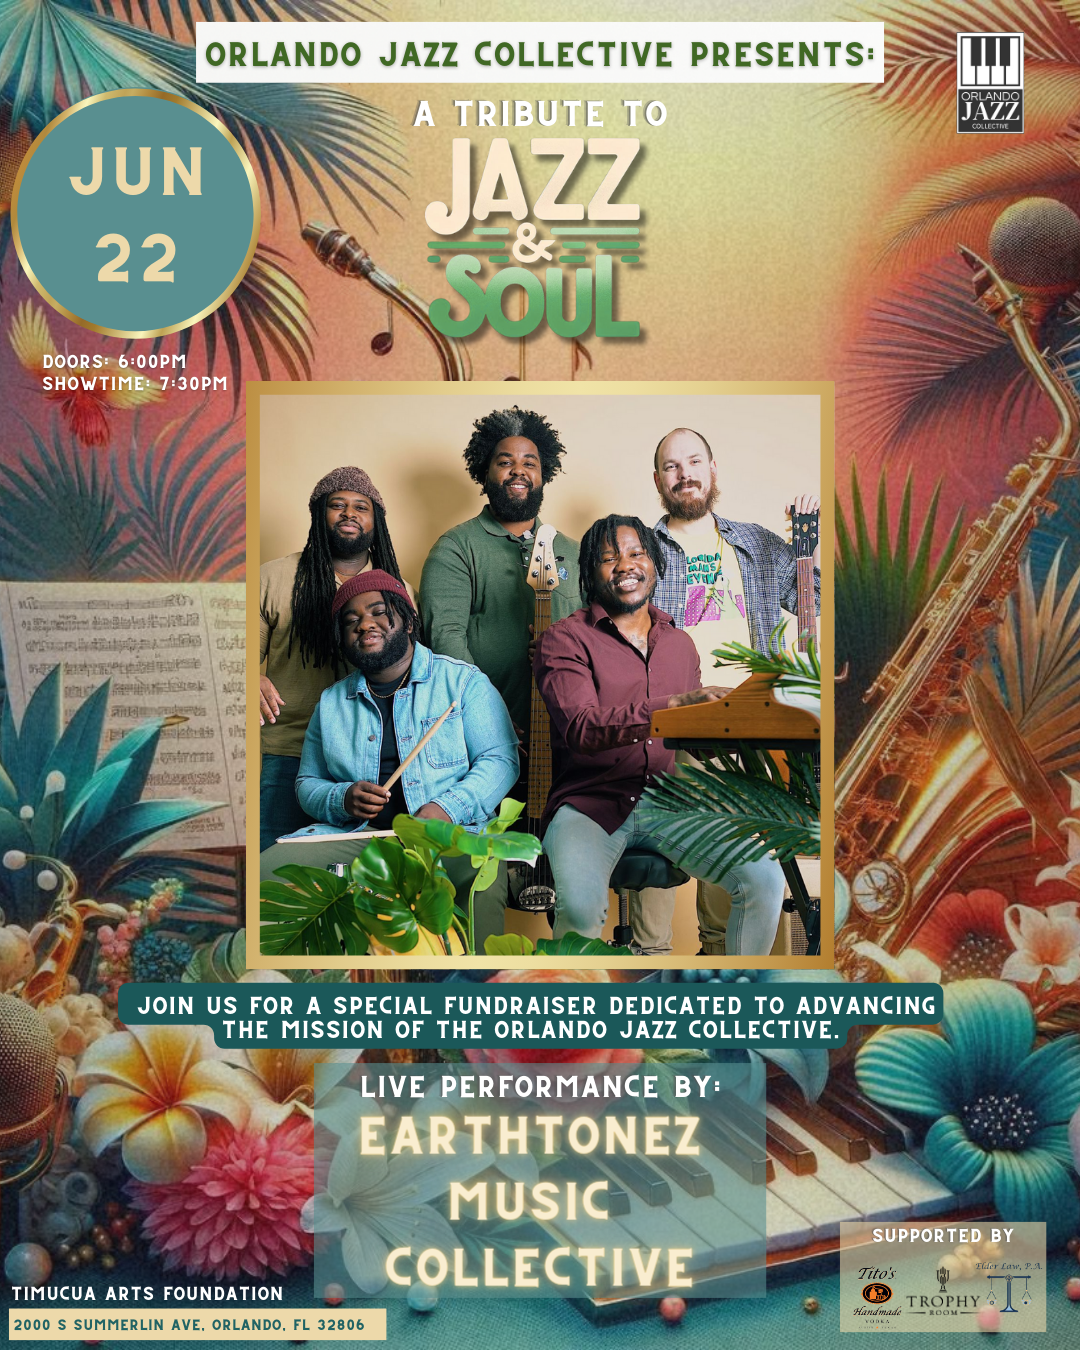 Orlando Jazz Collective